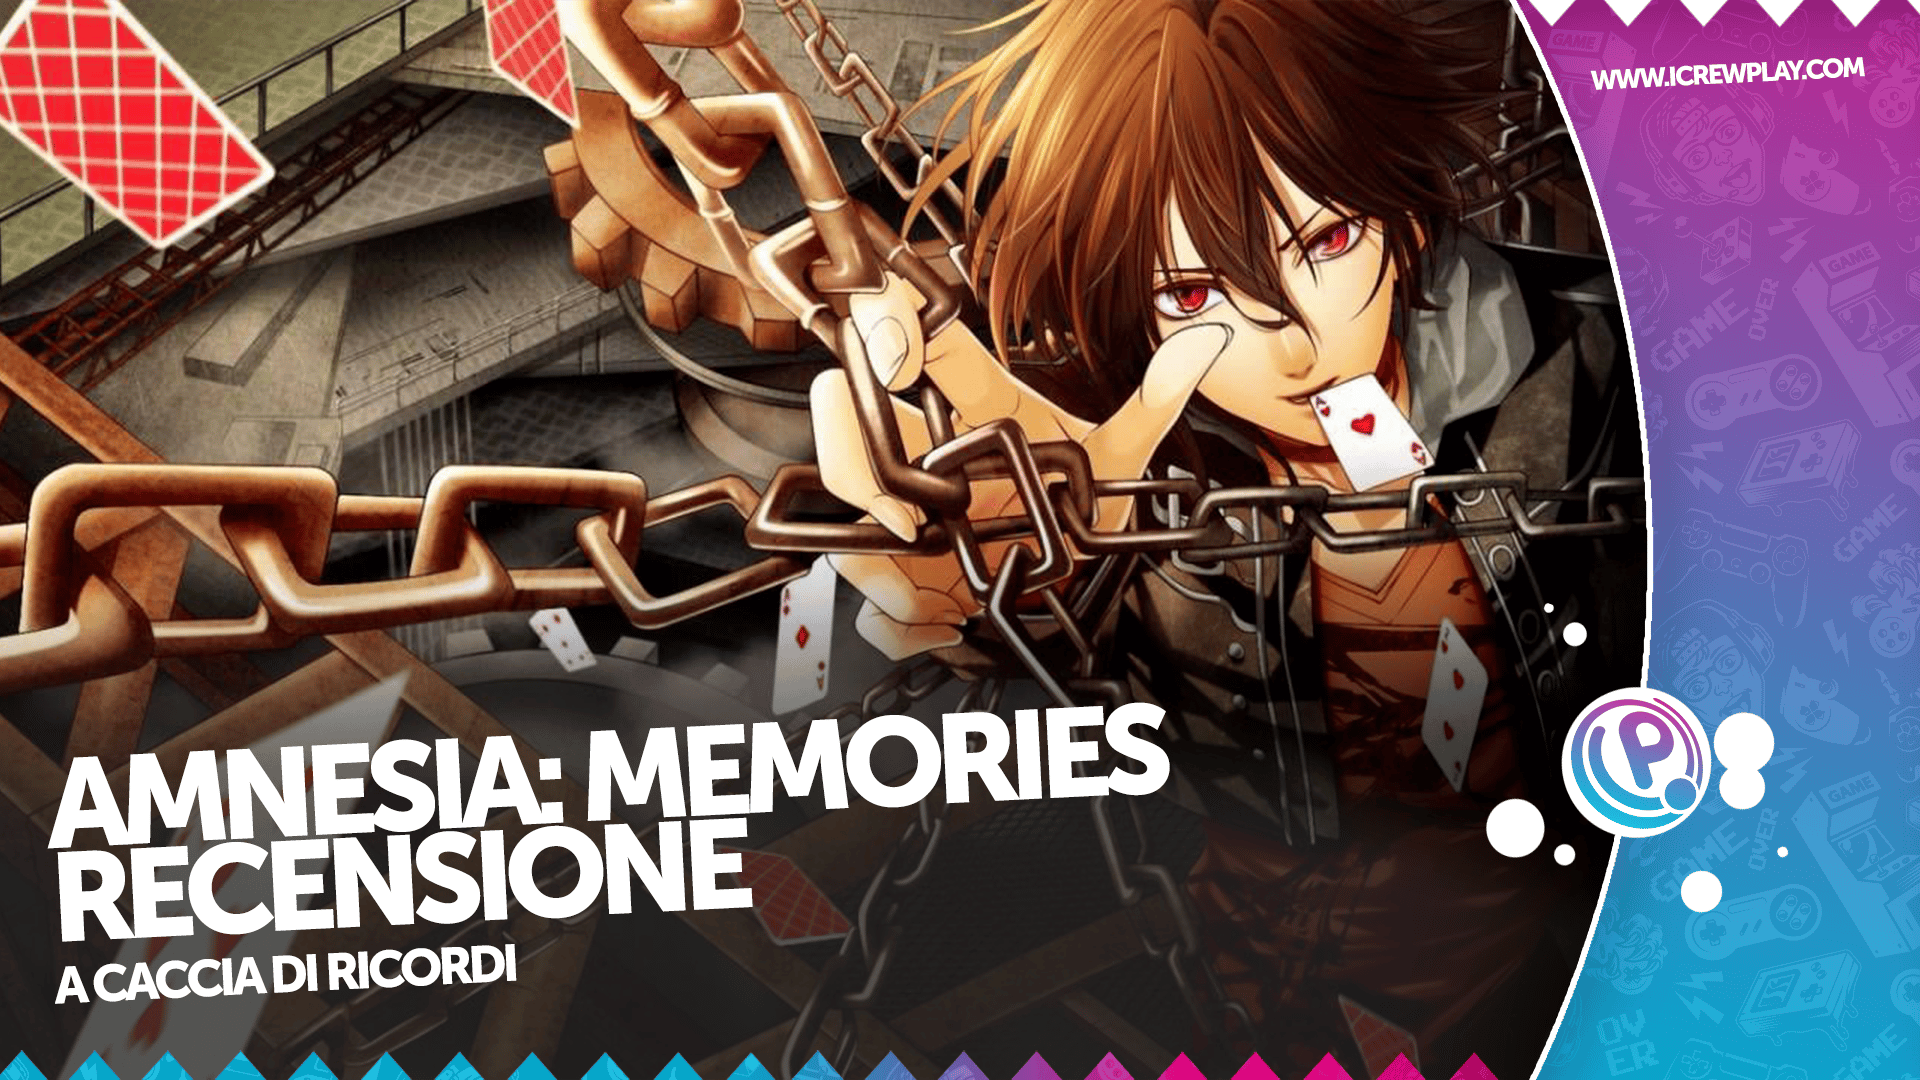 Amnesia: Memories recensione per Nintendo Switch 8